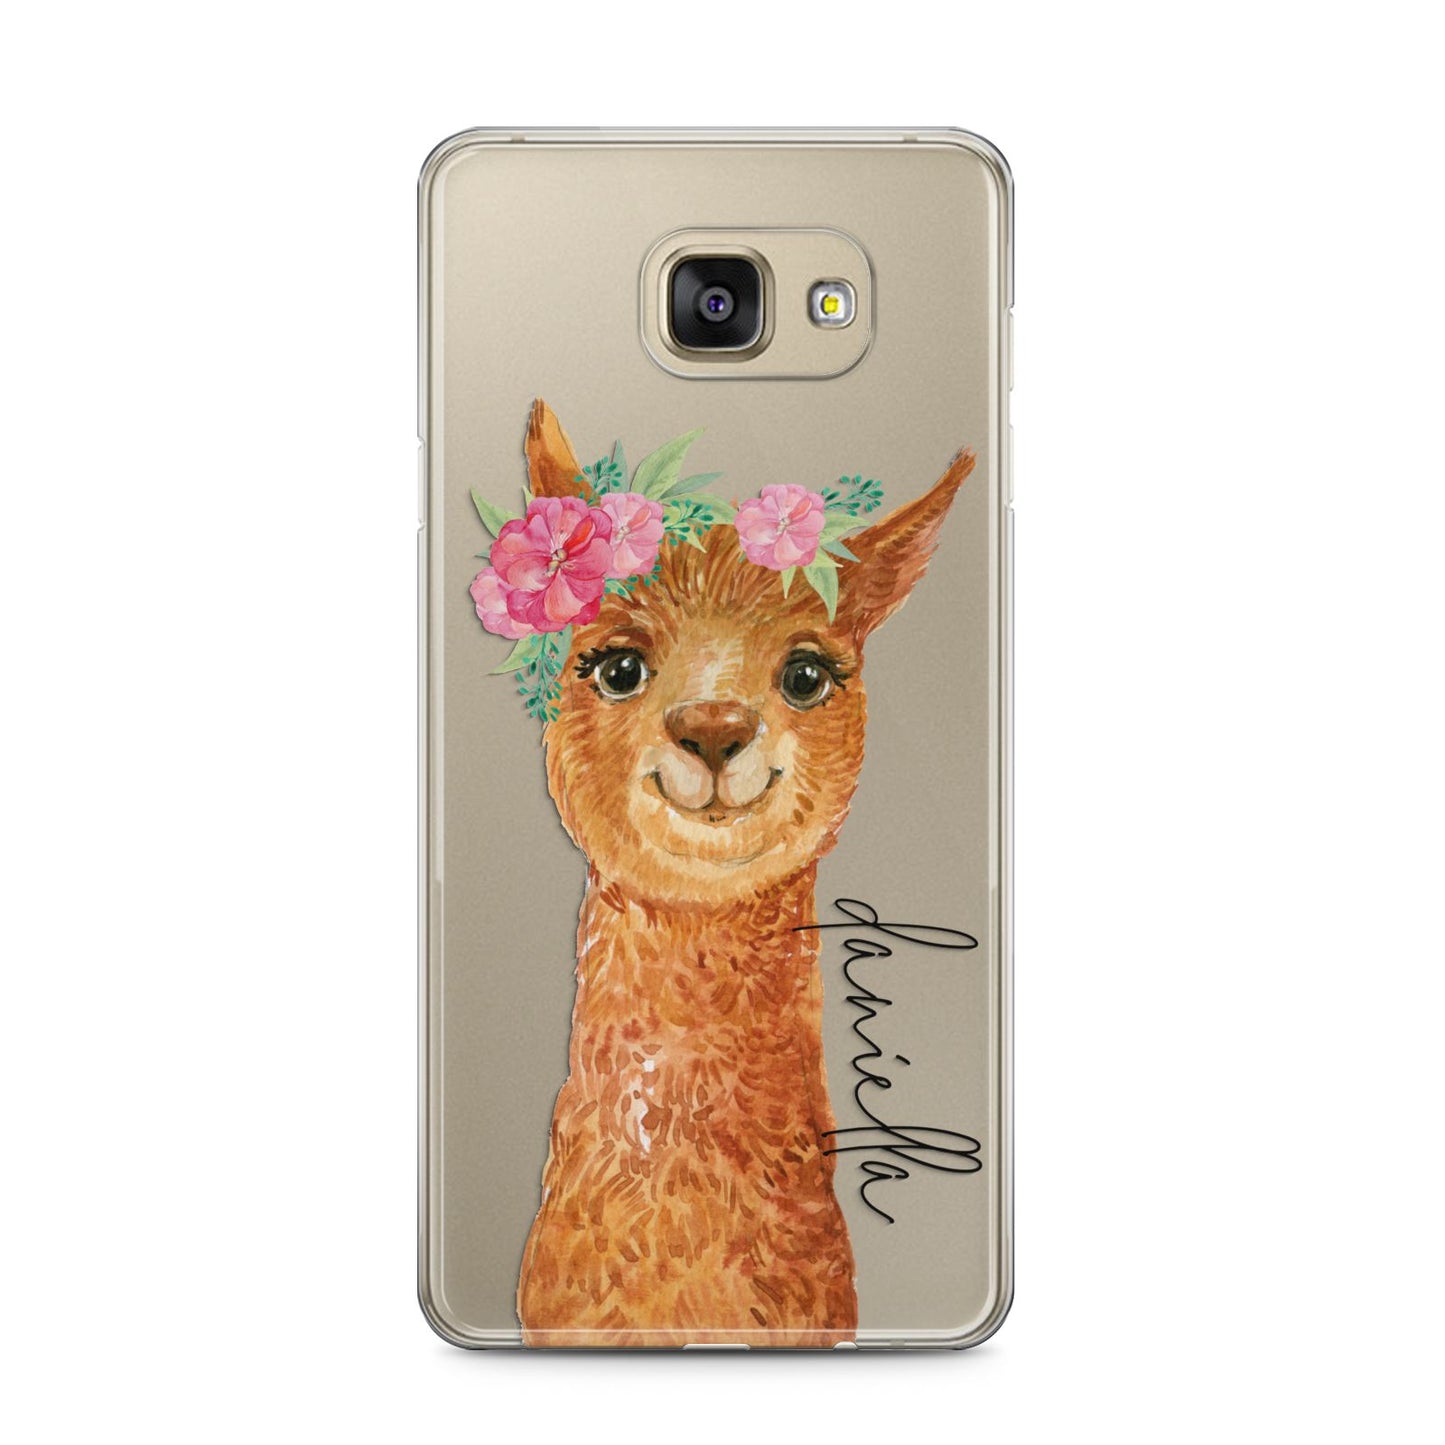 Personalised Llama Samsung Galaxy A5 2016 Case on gold phone